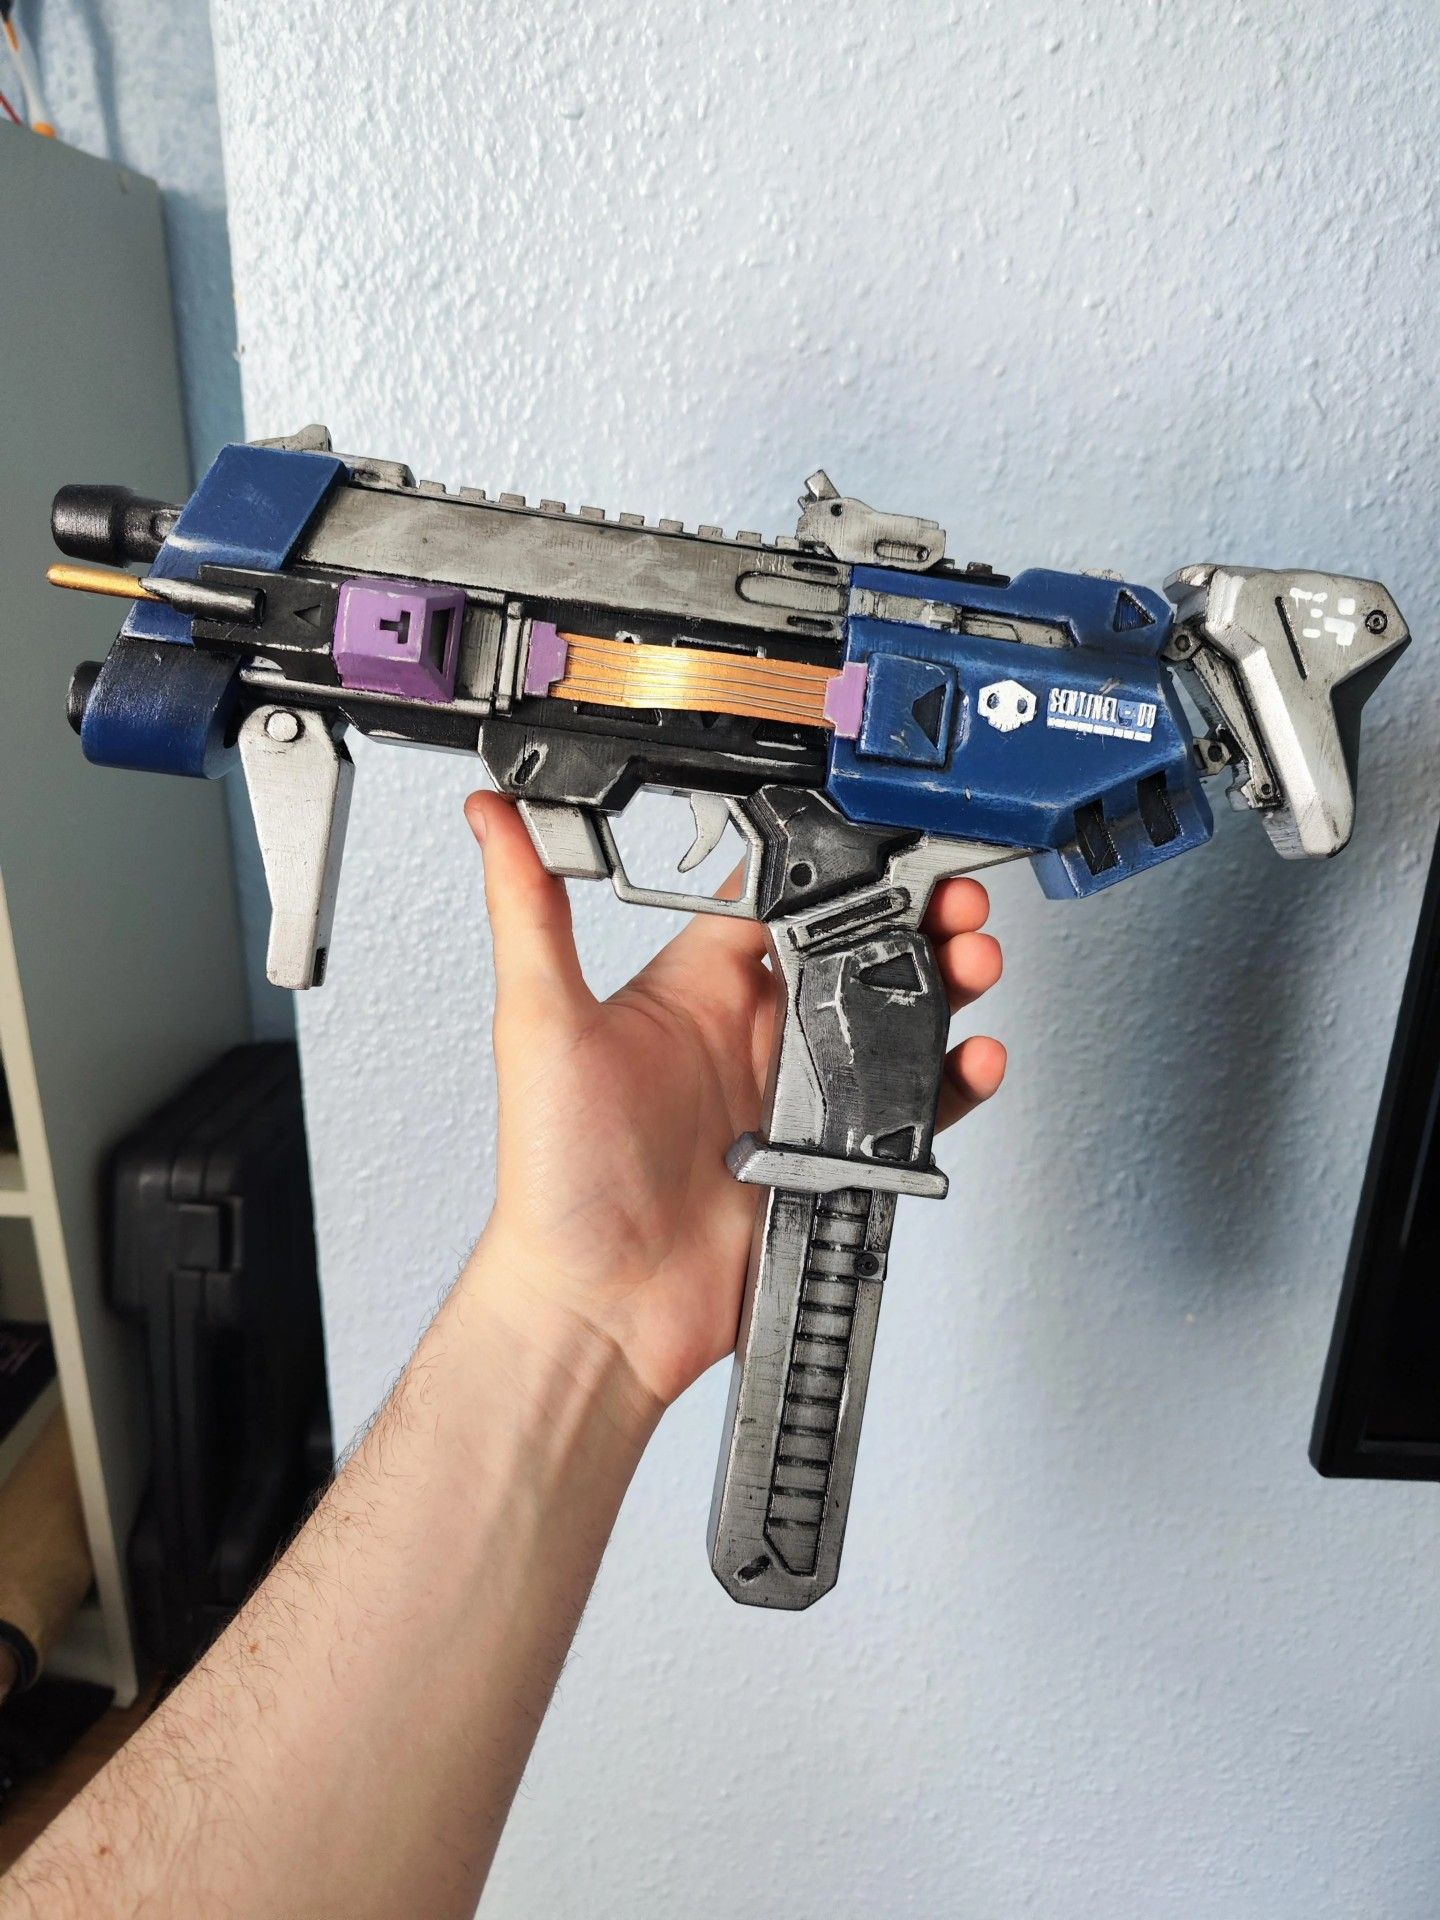 Sombra's gun